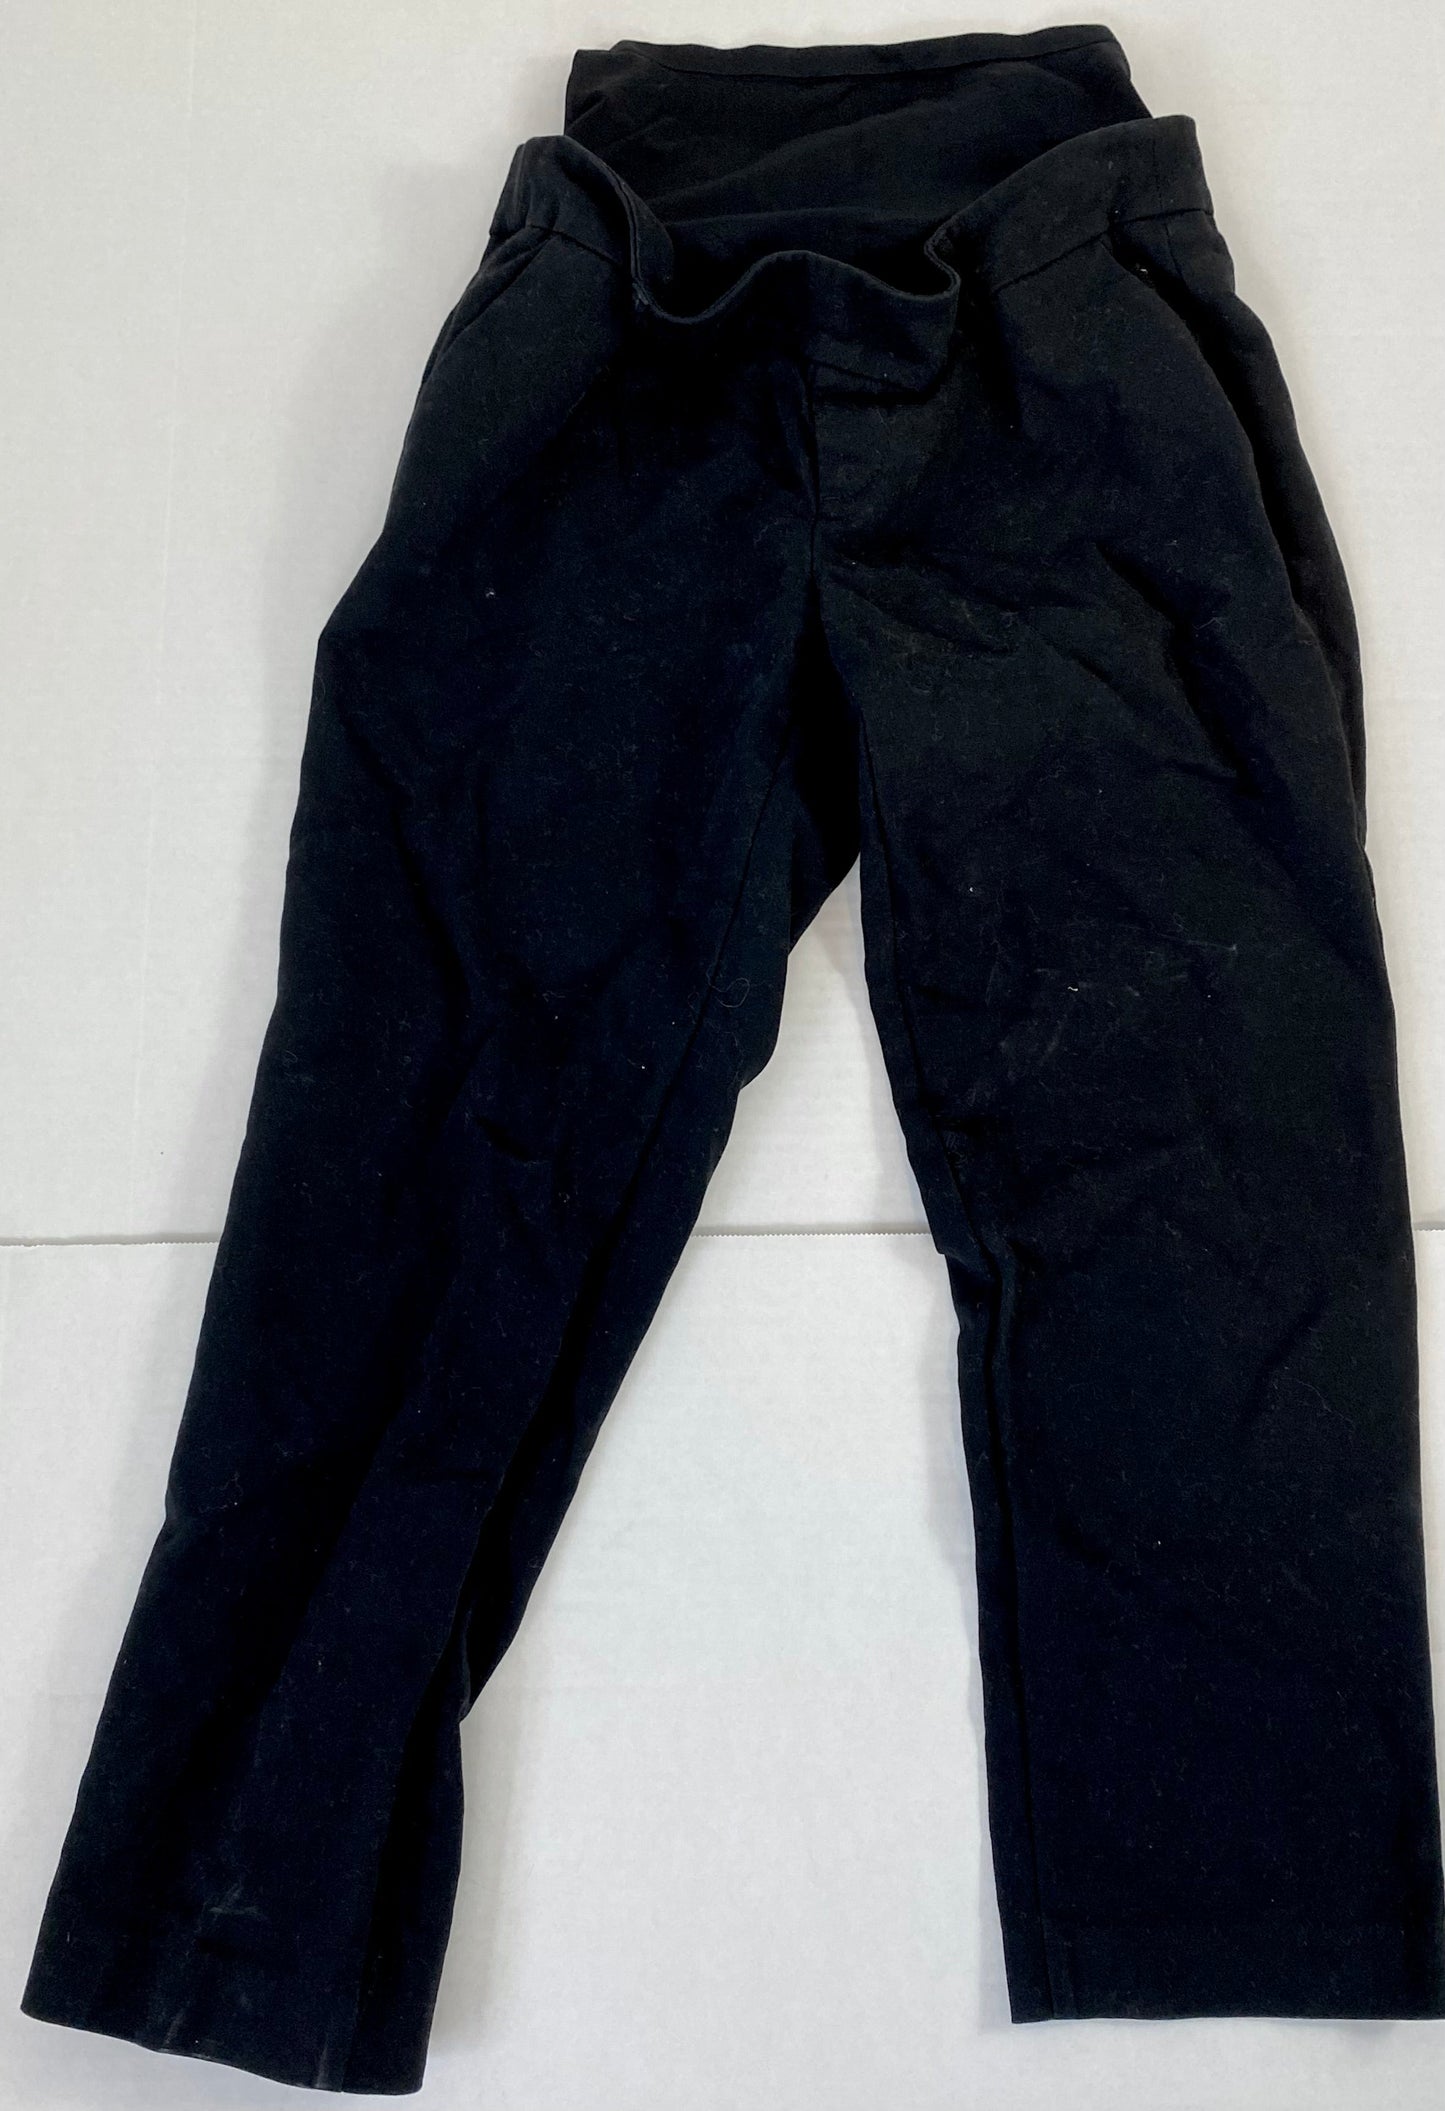 Maternity Small/6-Old Navy Black Full Panel Cotton Capri Ankle Pants w/ Pockets